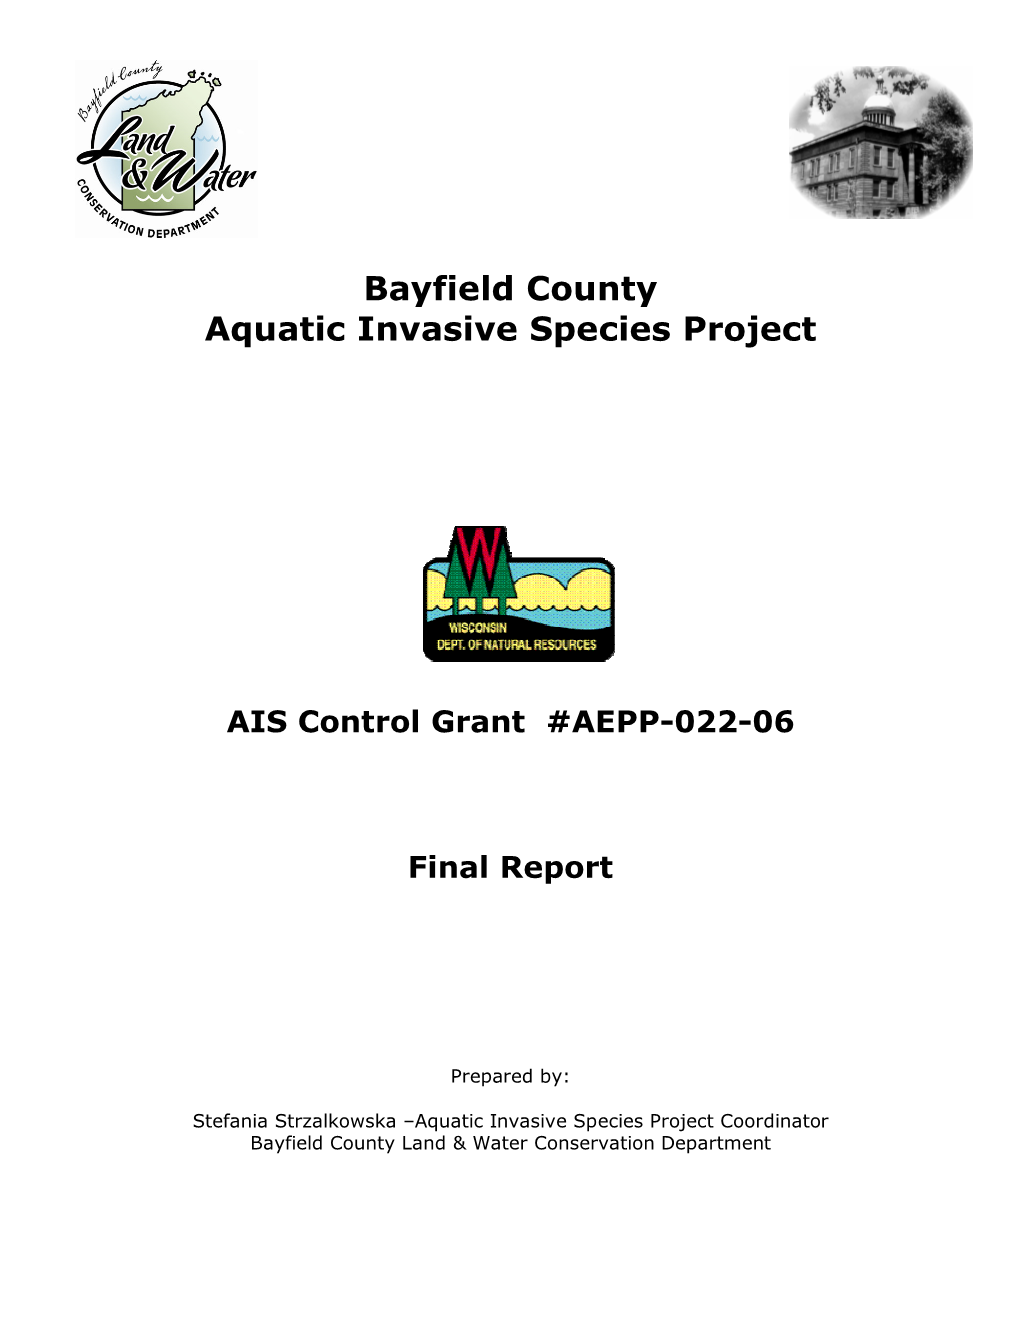 Bayfield County Aquatic Invasive Species Project